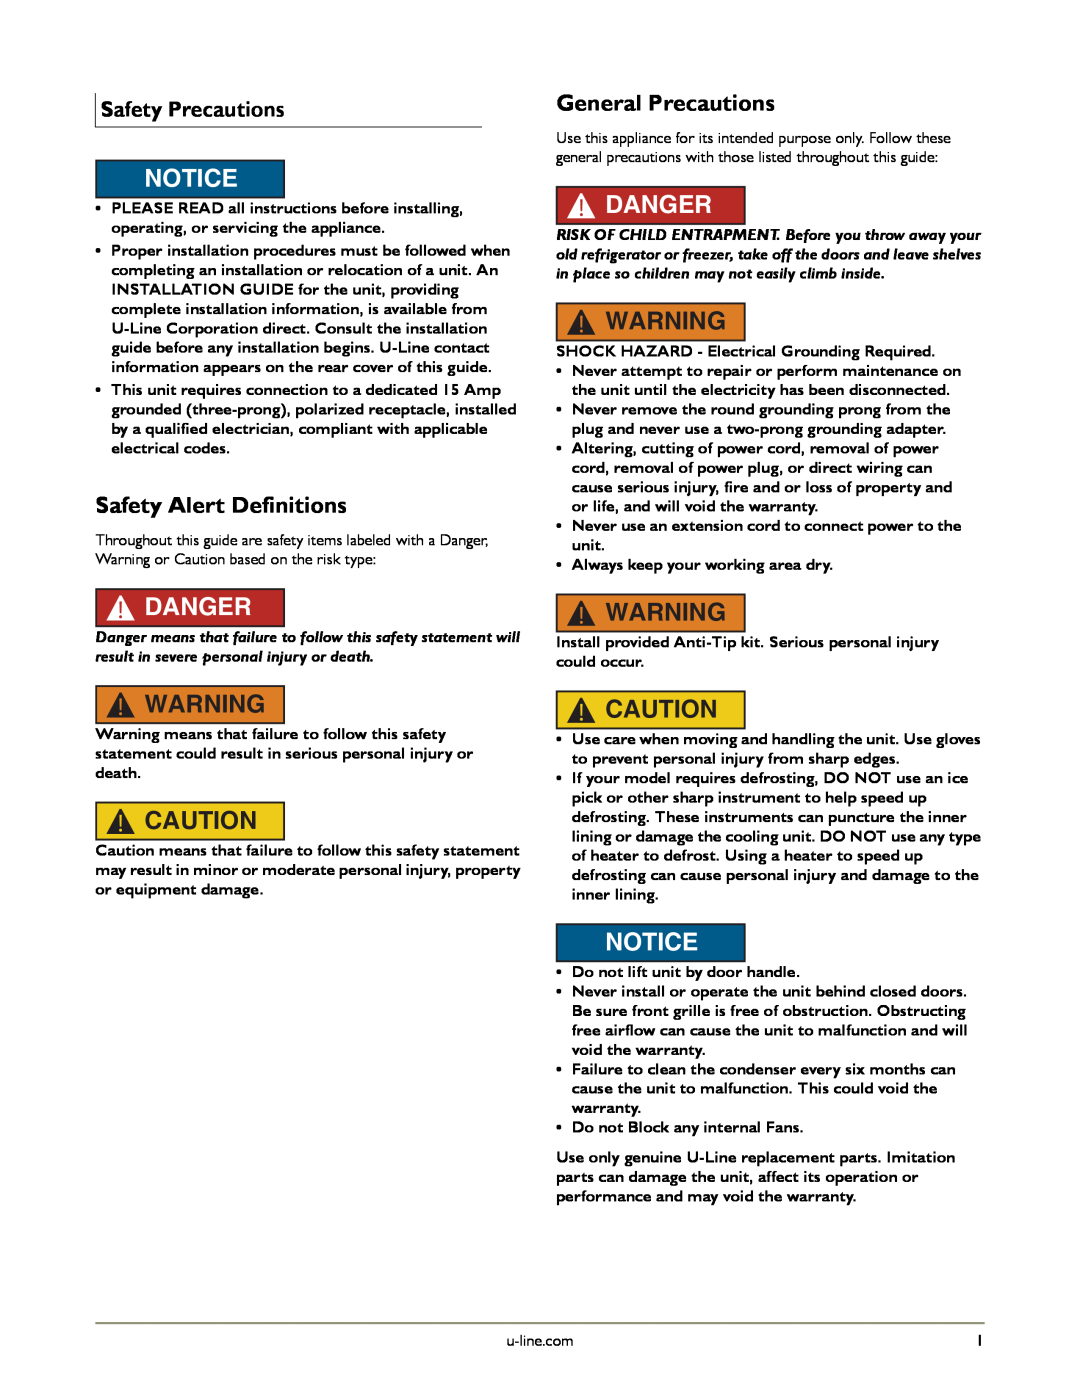 U-Line U-CO298-00 manual Danger, Safety Alert Definitions, General Precautions, Safety Precautions 